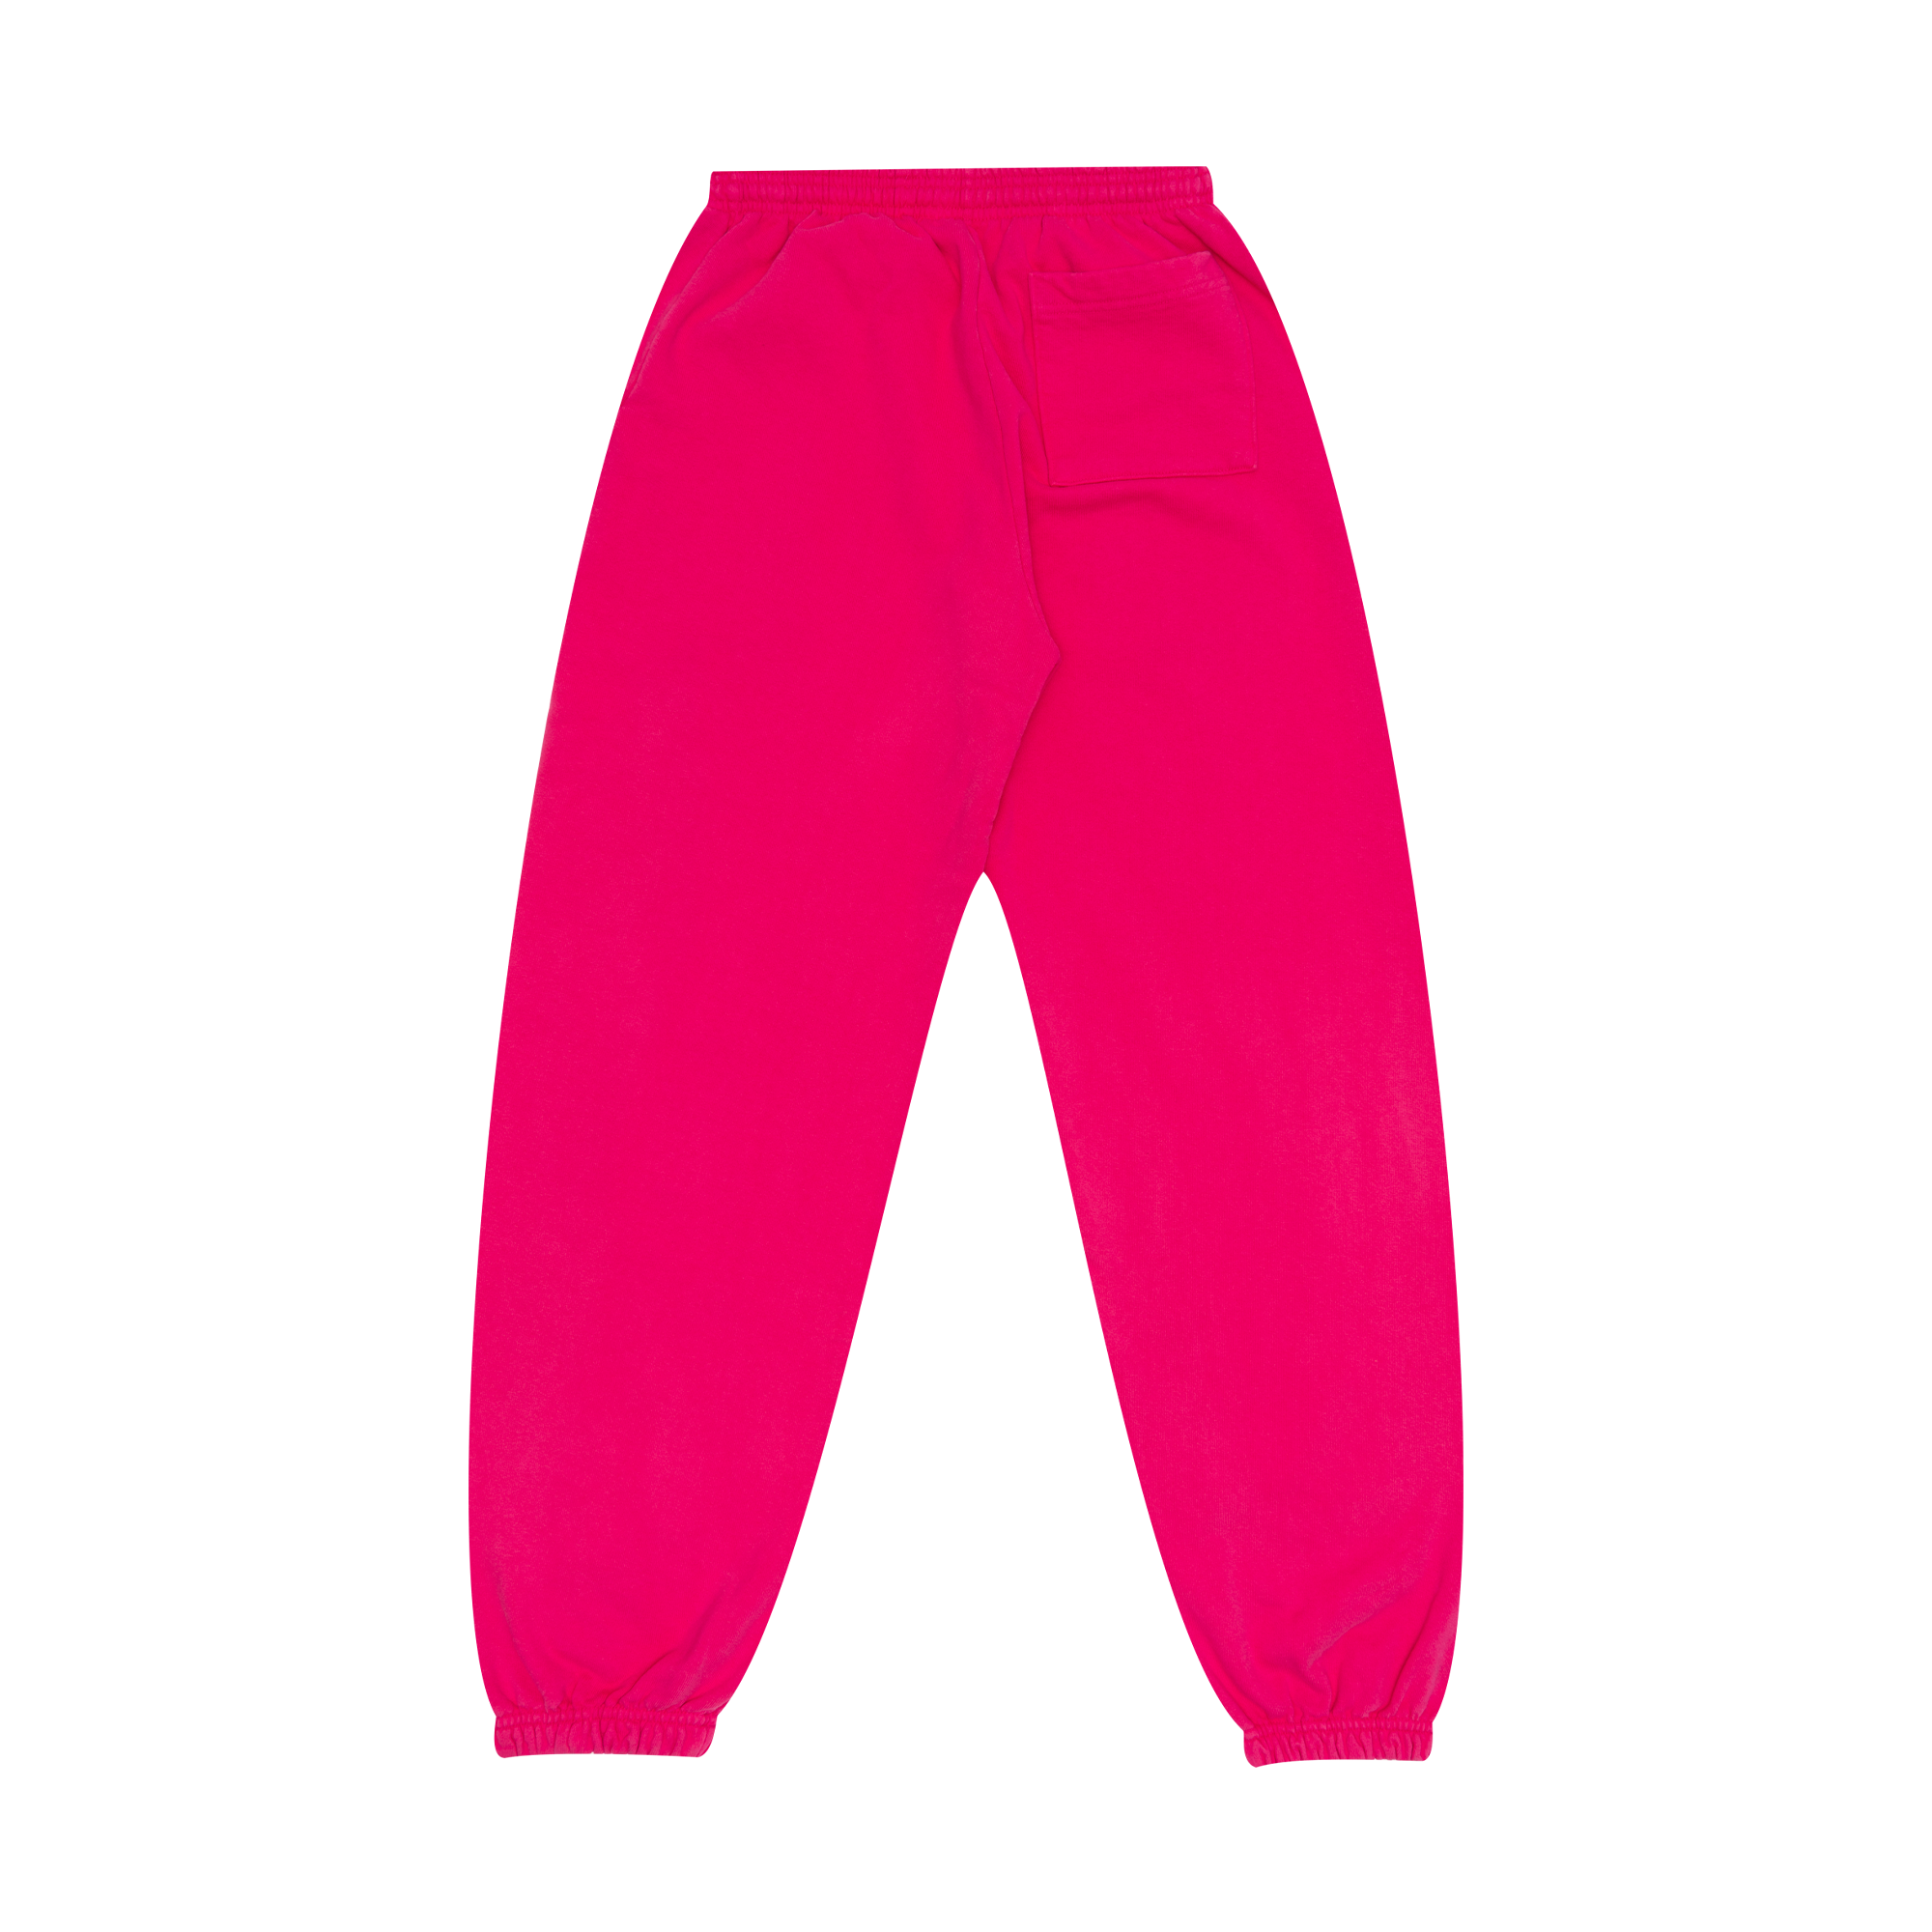 Sp5der, Pants, Sp5der Worldwide Sweatpants Size Large Punk Black Pink  Young Thug Spider New